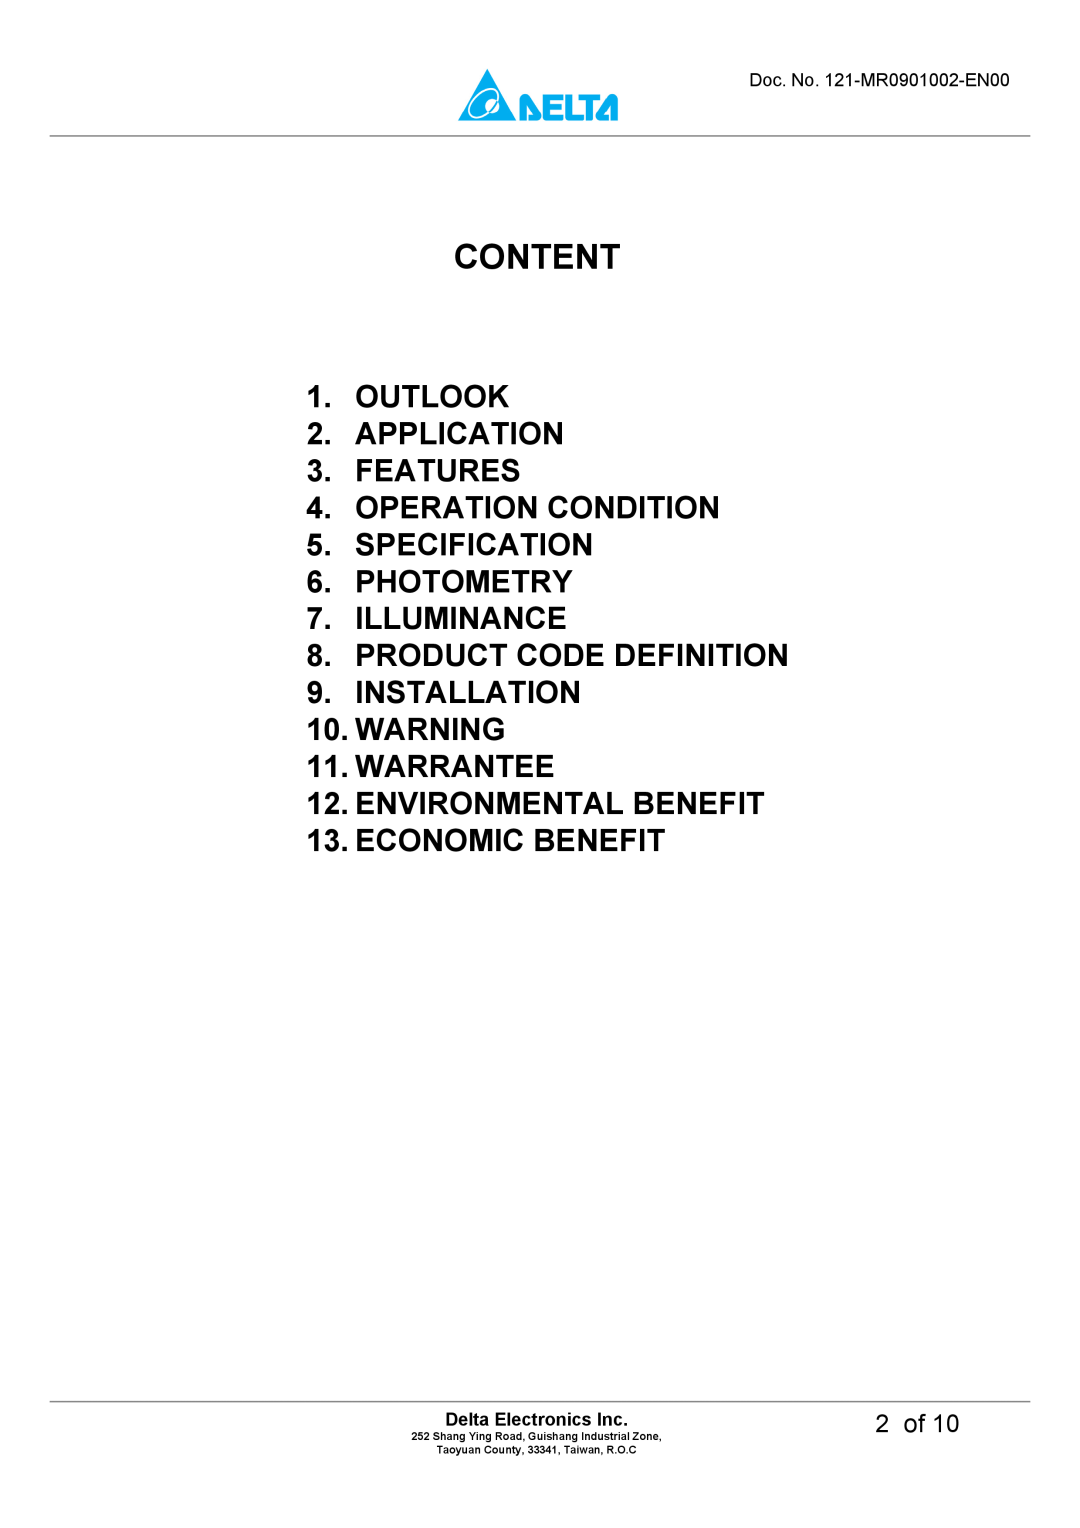 Delta Electronics MADT-09LD manual Content, 2 of, Delta Electronics Inc, OUTLOOK 2.APPLICATION 3.FEATURES, Economic Benefit 